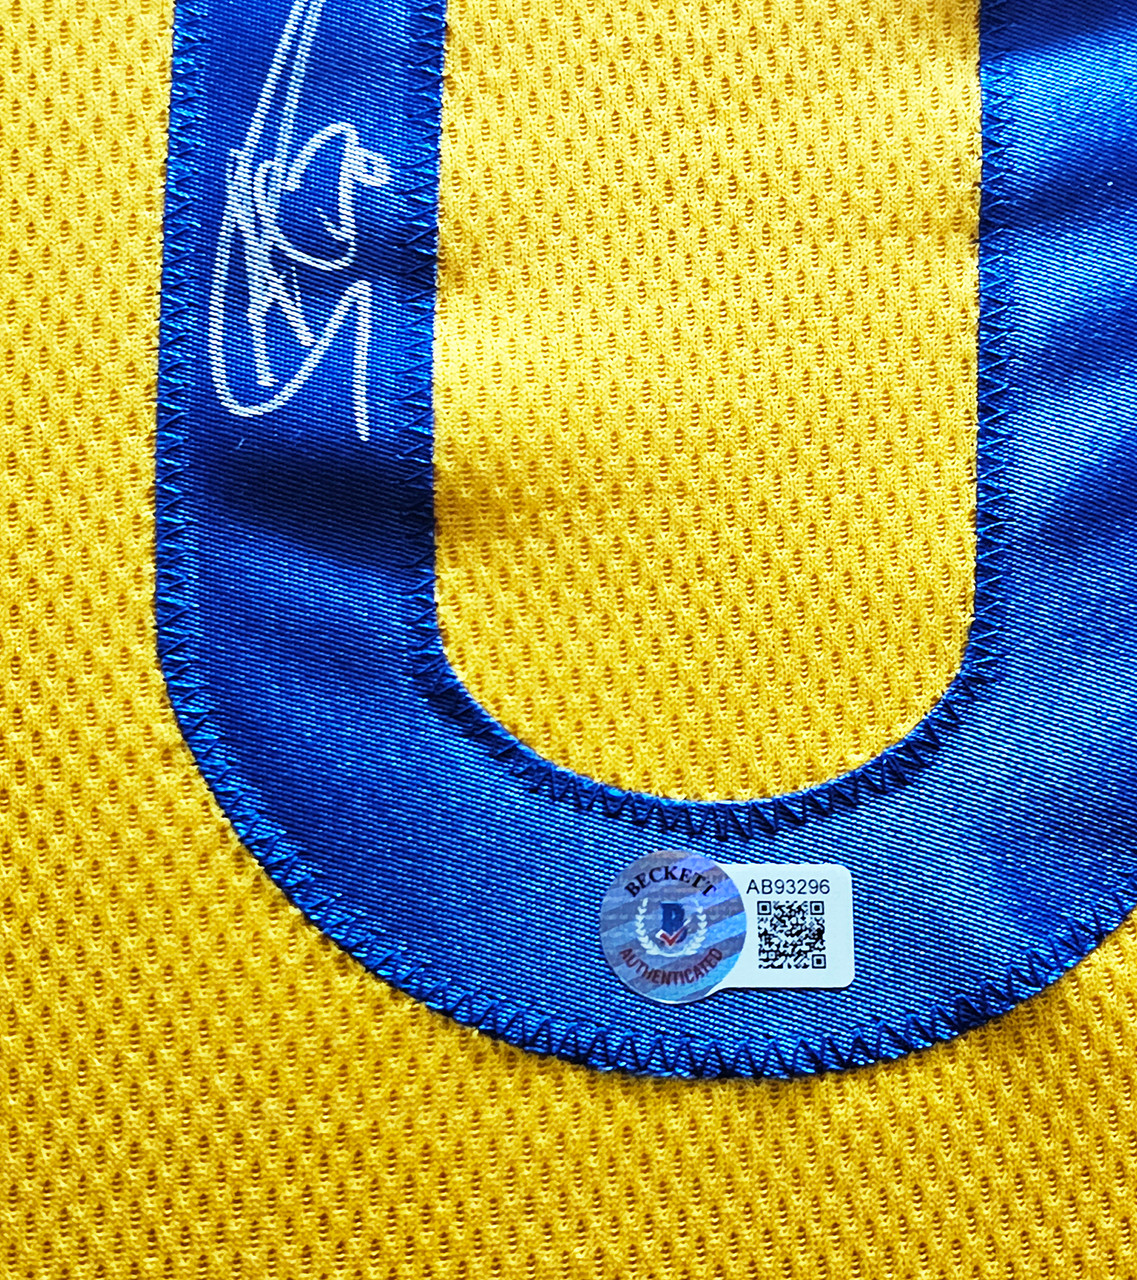 Golden State Warriors Stephen Curry Autographed Yellow Jersey Beckett BAS  Stock #212453